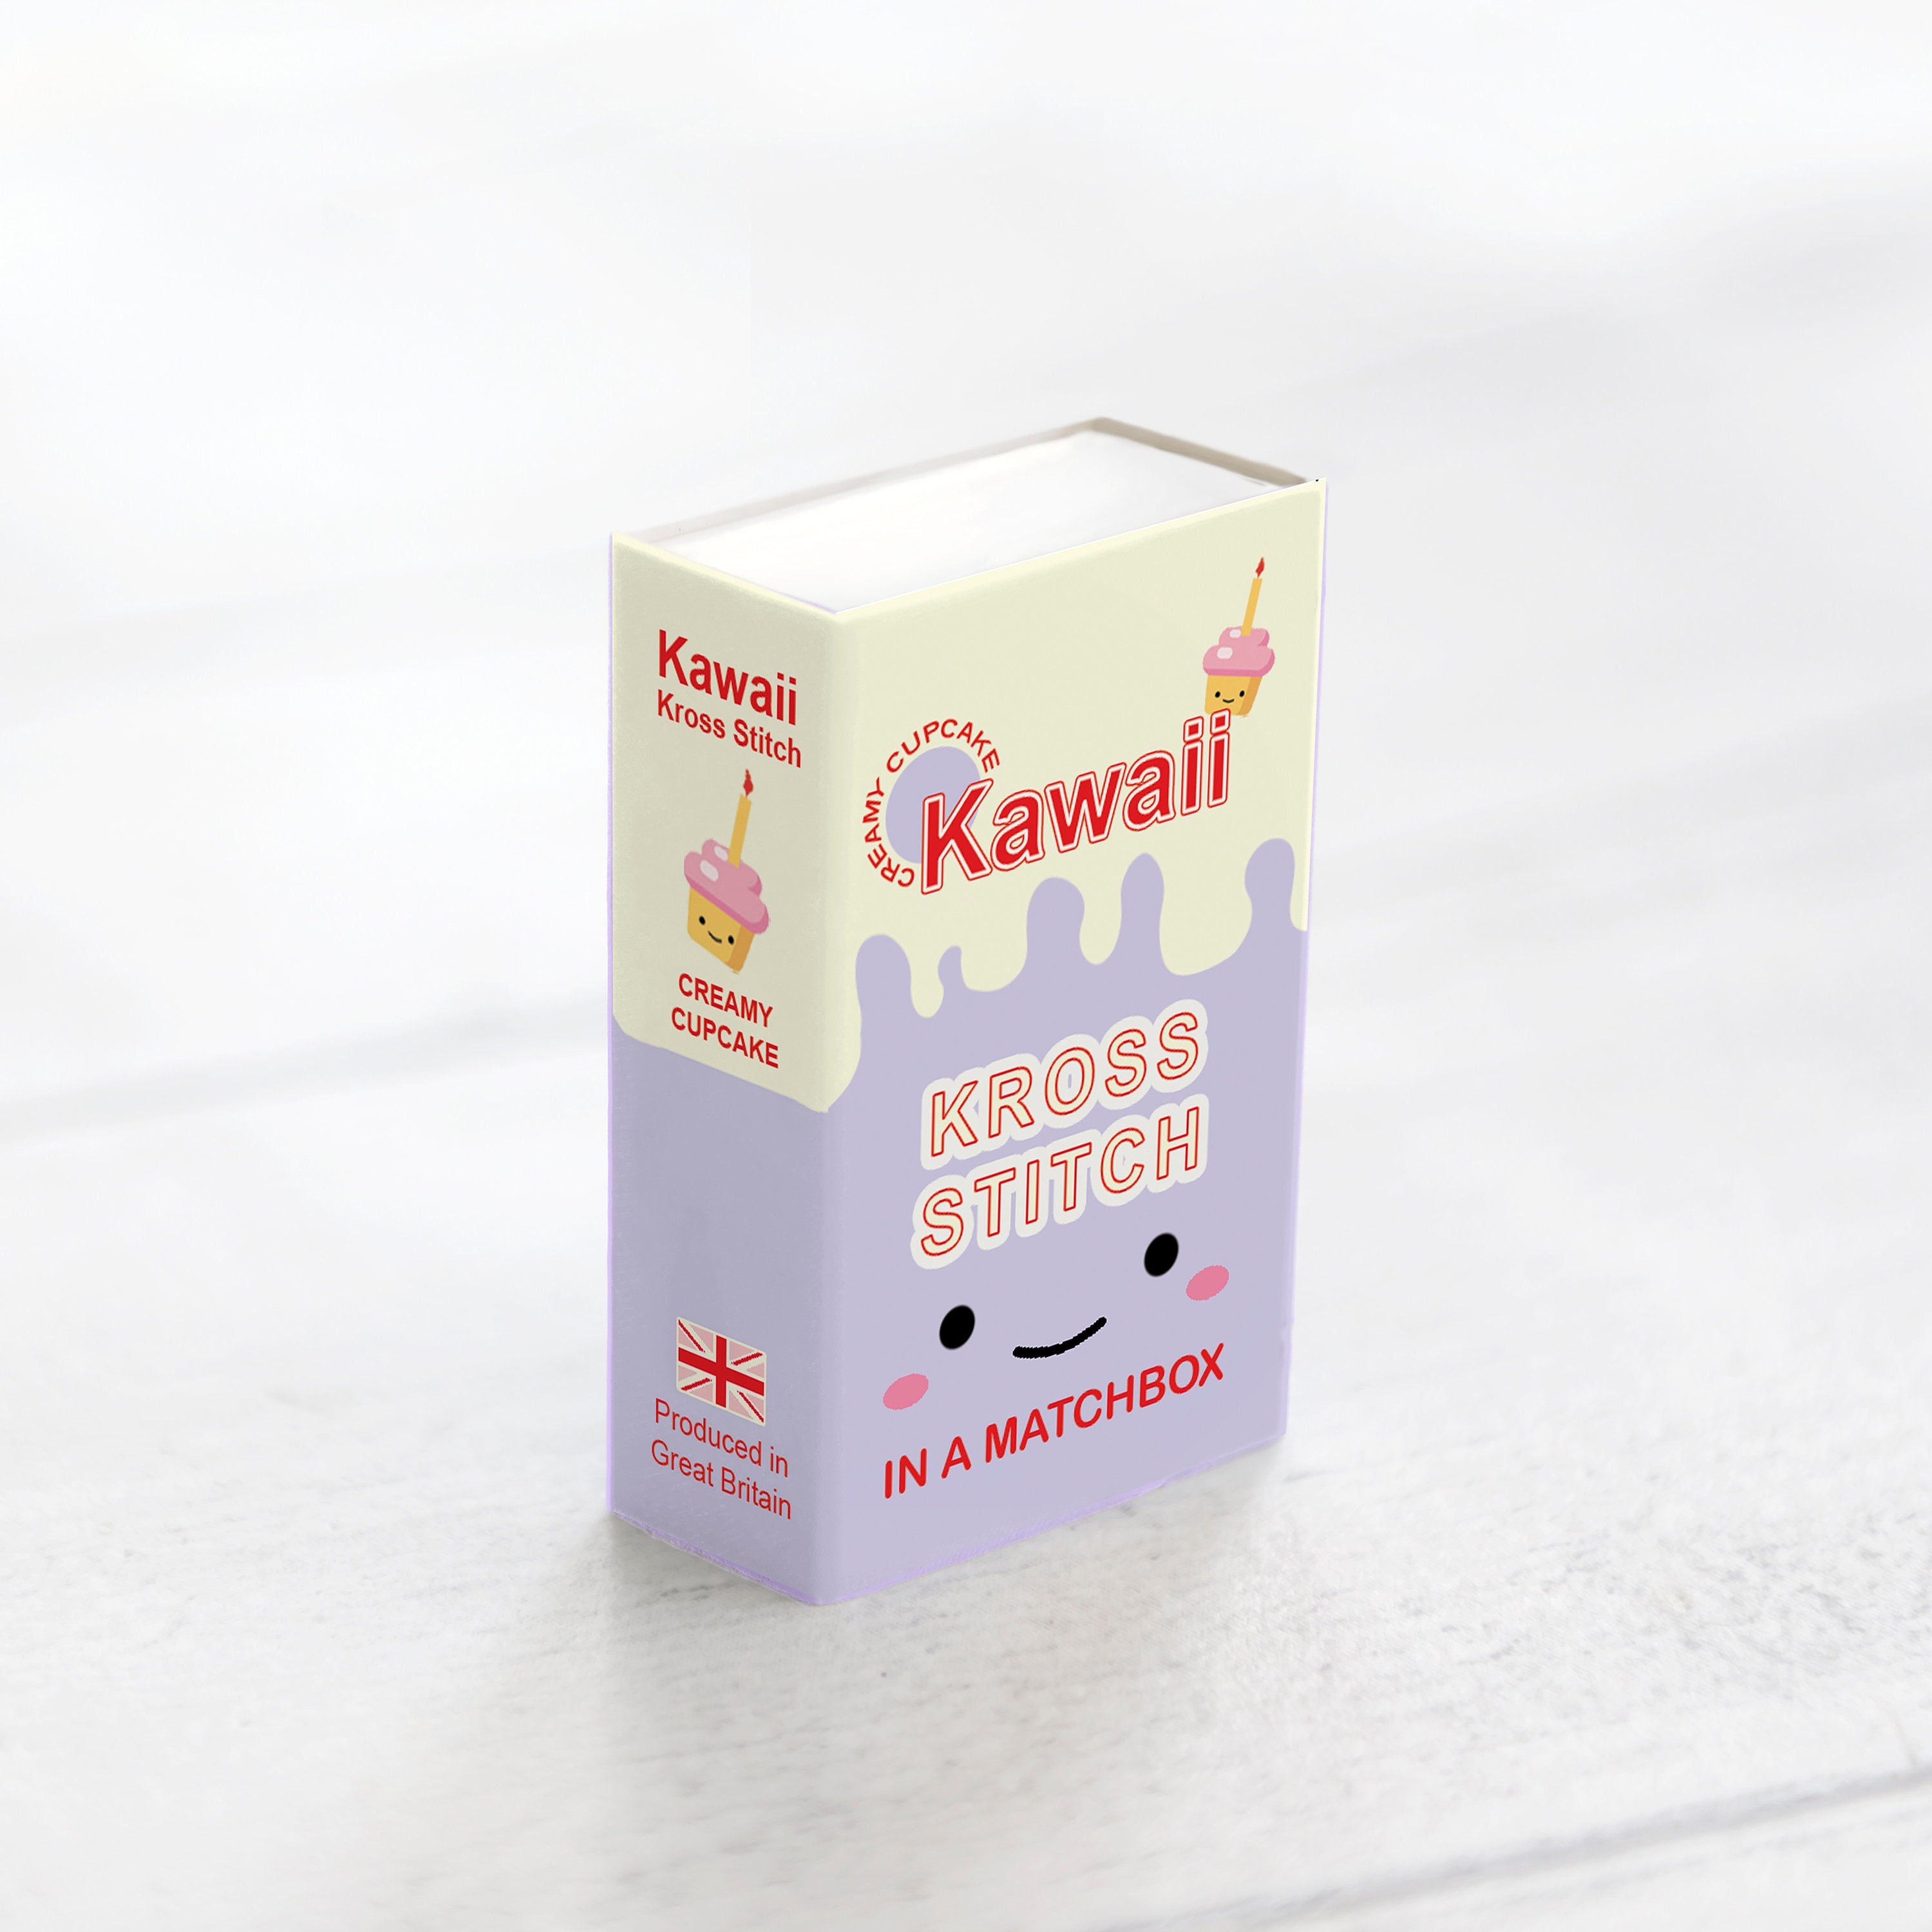 Mini Cross Stitch Kit With Kawaii Cup Cake In A Matchbox